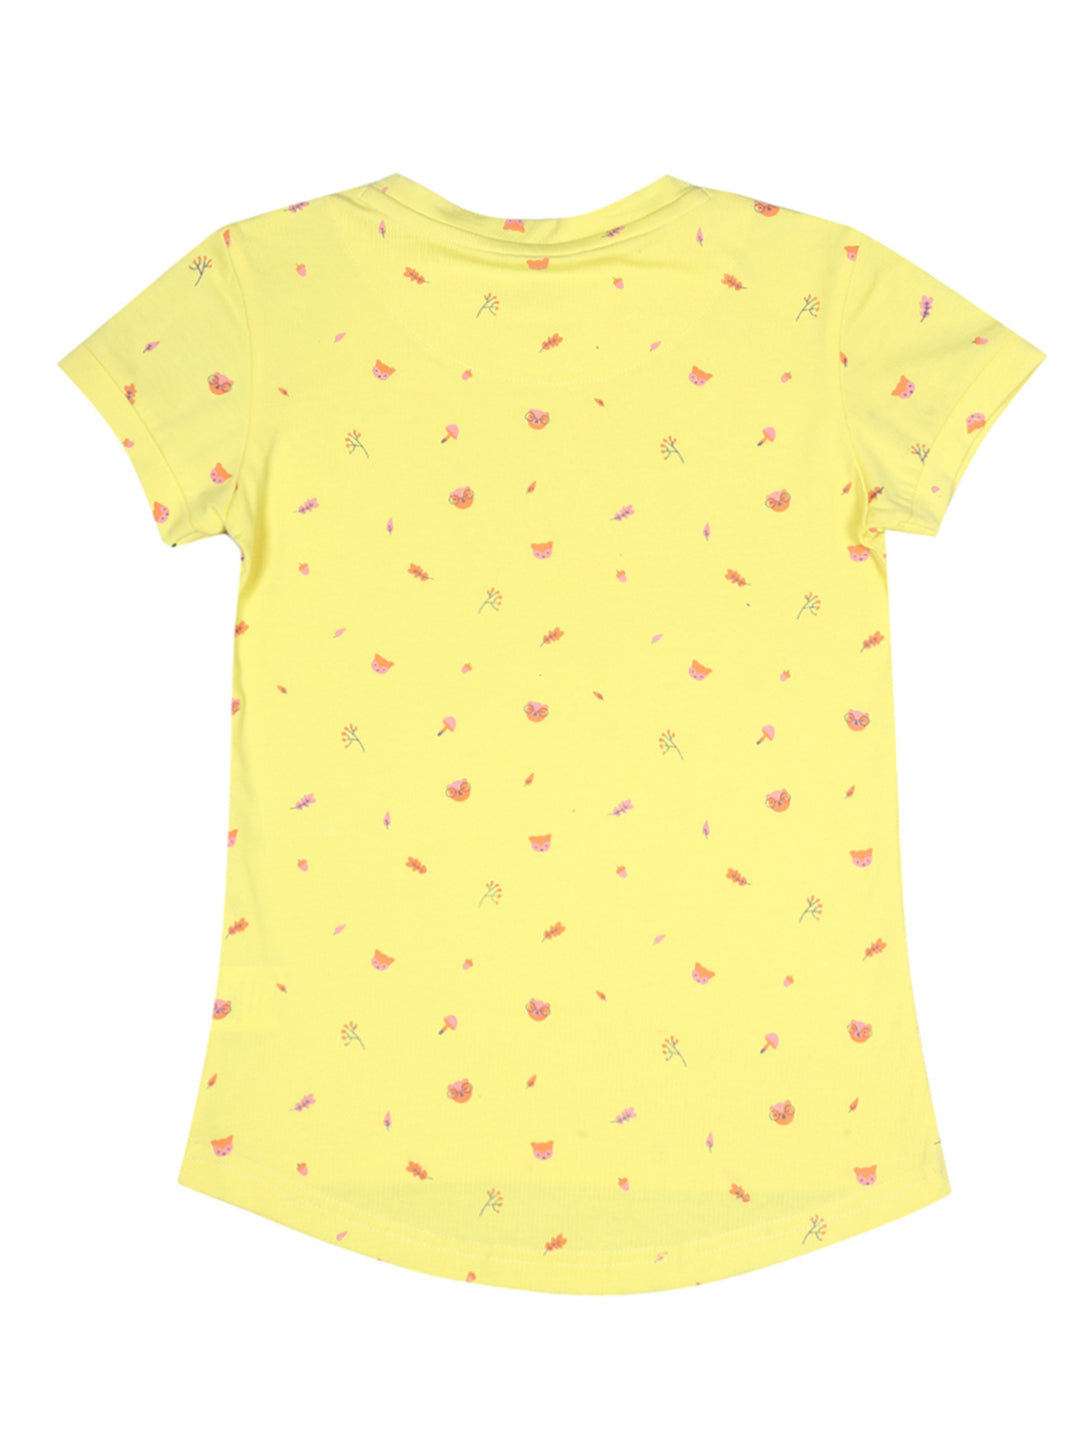 Girls Yellow Printed Knits Knits Top